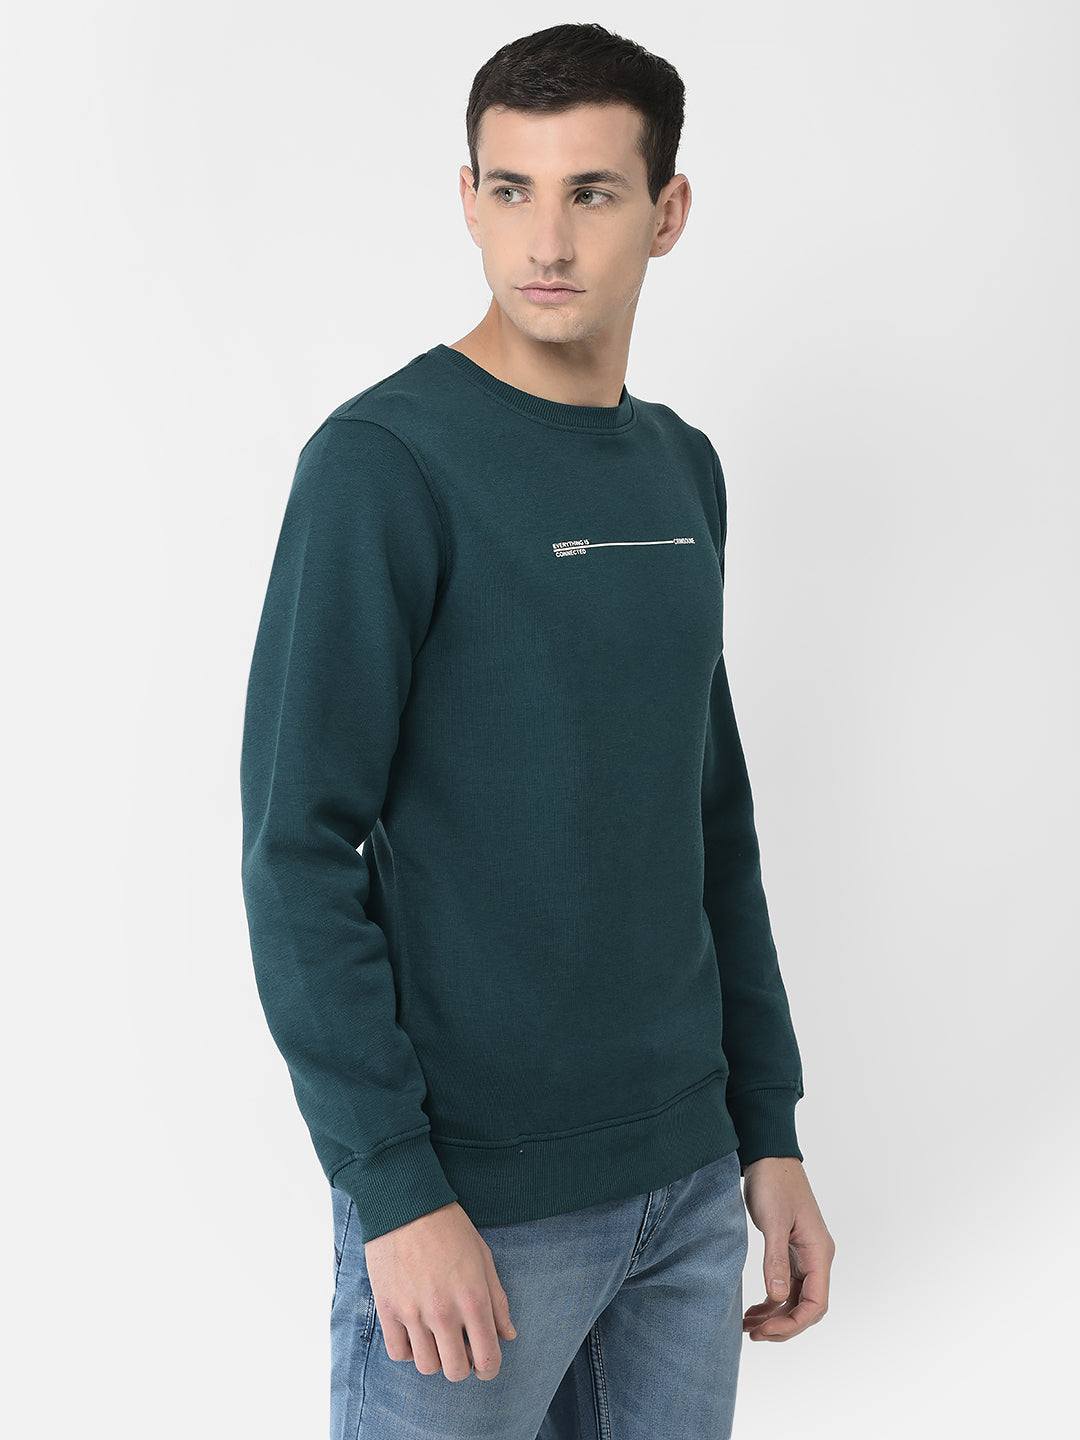  Teal Green Connection Sweatshirt